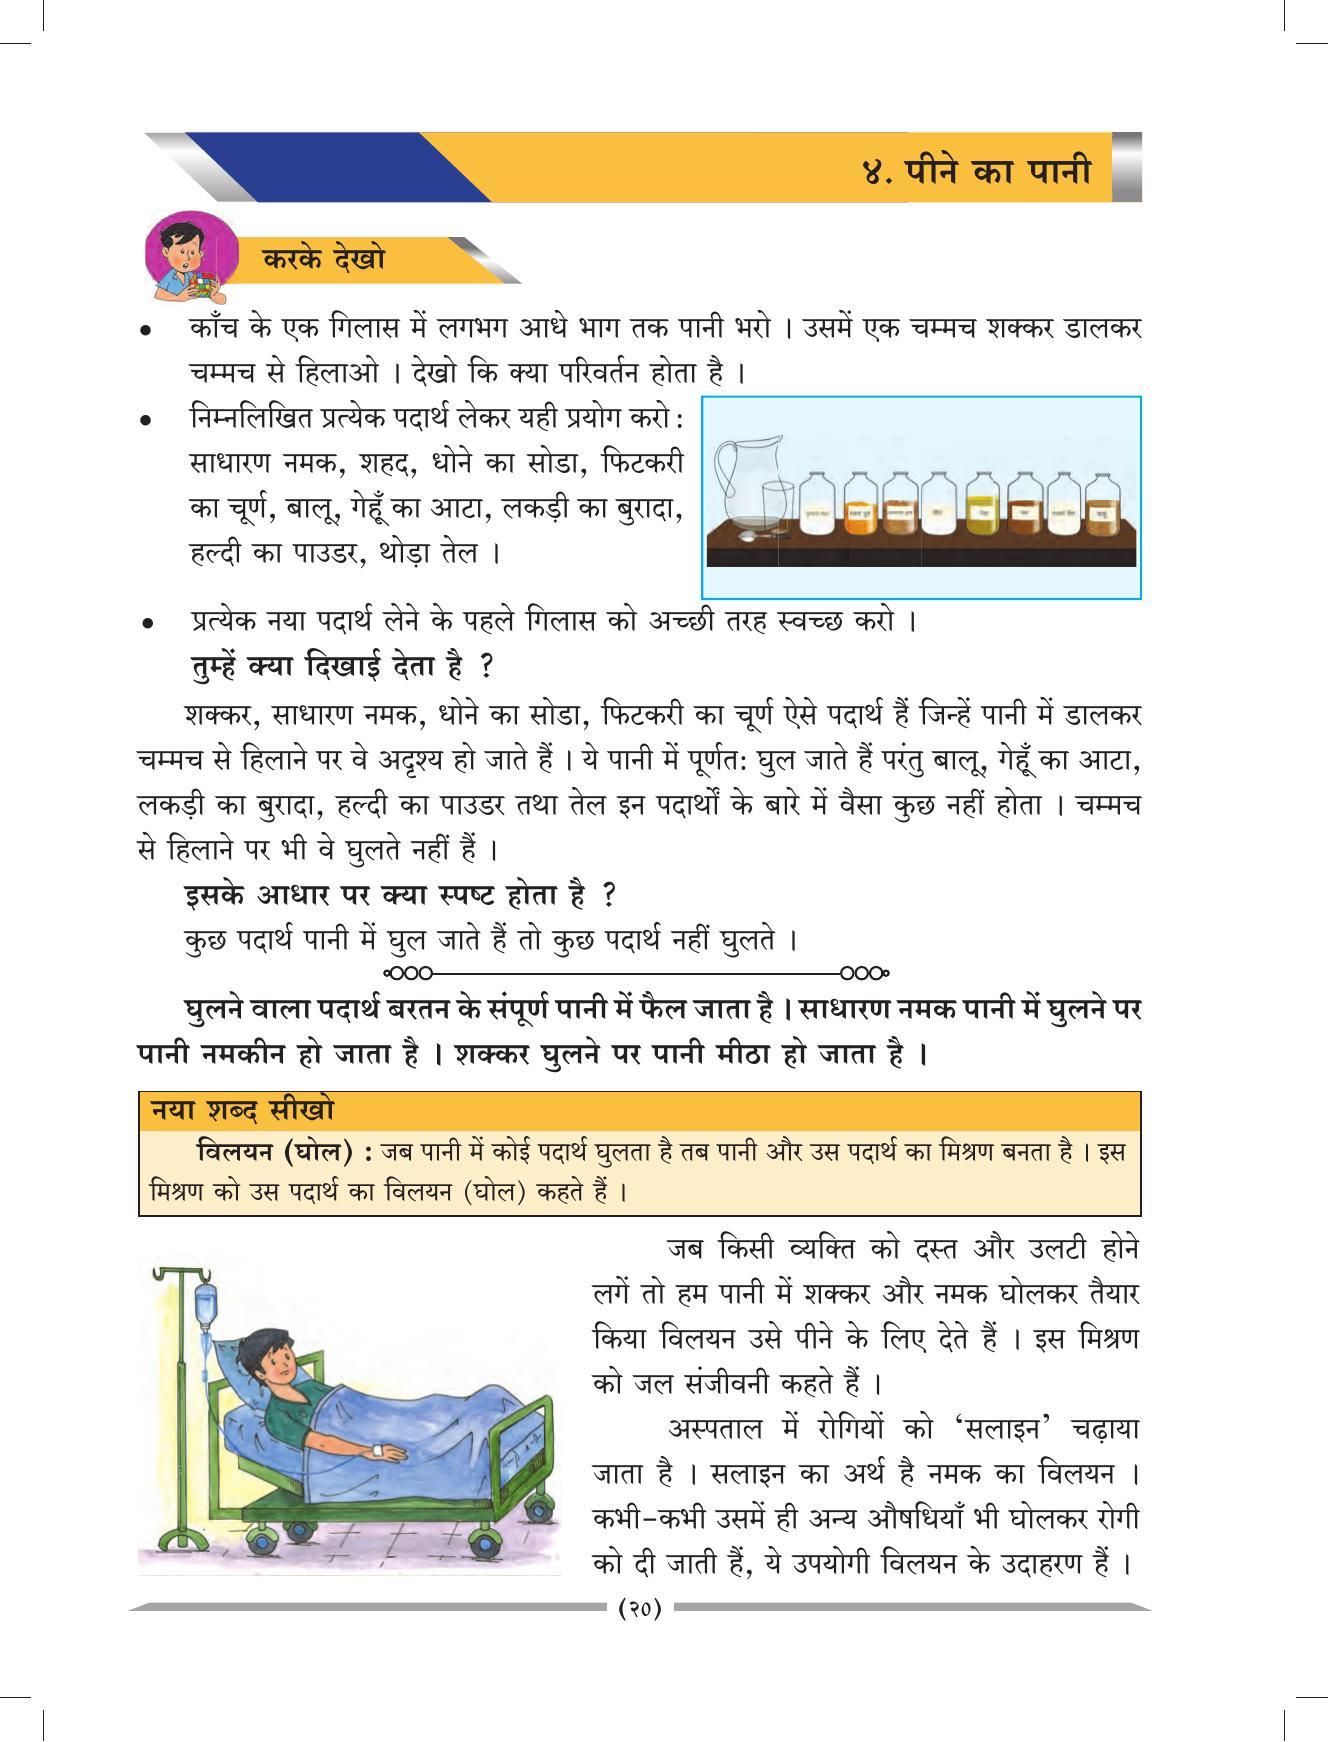 Maharashtra Board Class 4 EVS 1 (Hindi Medium) Textbook - Page 30